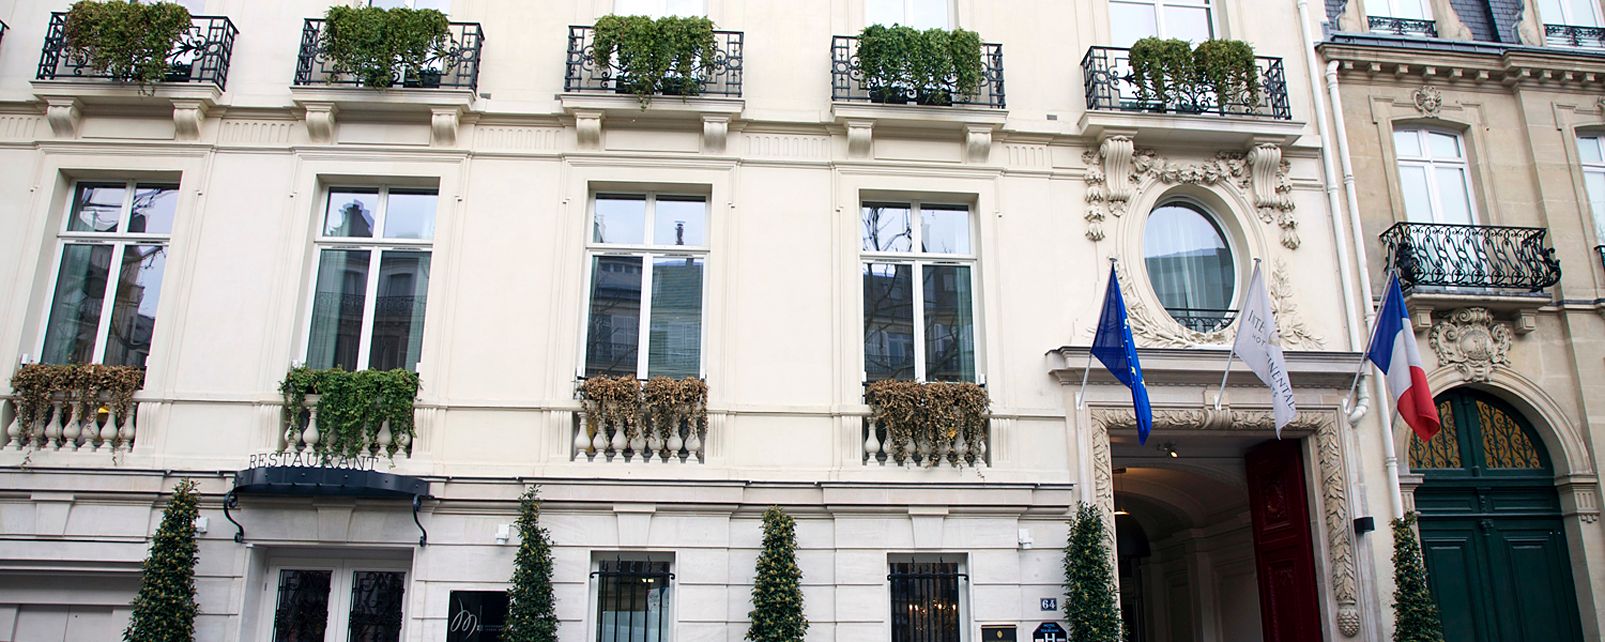 Hotel Intercontinental Paris Avenue Marceau